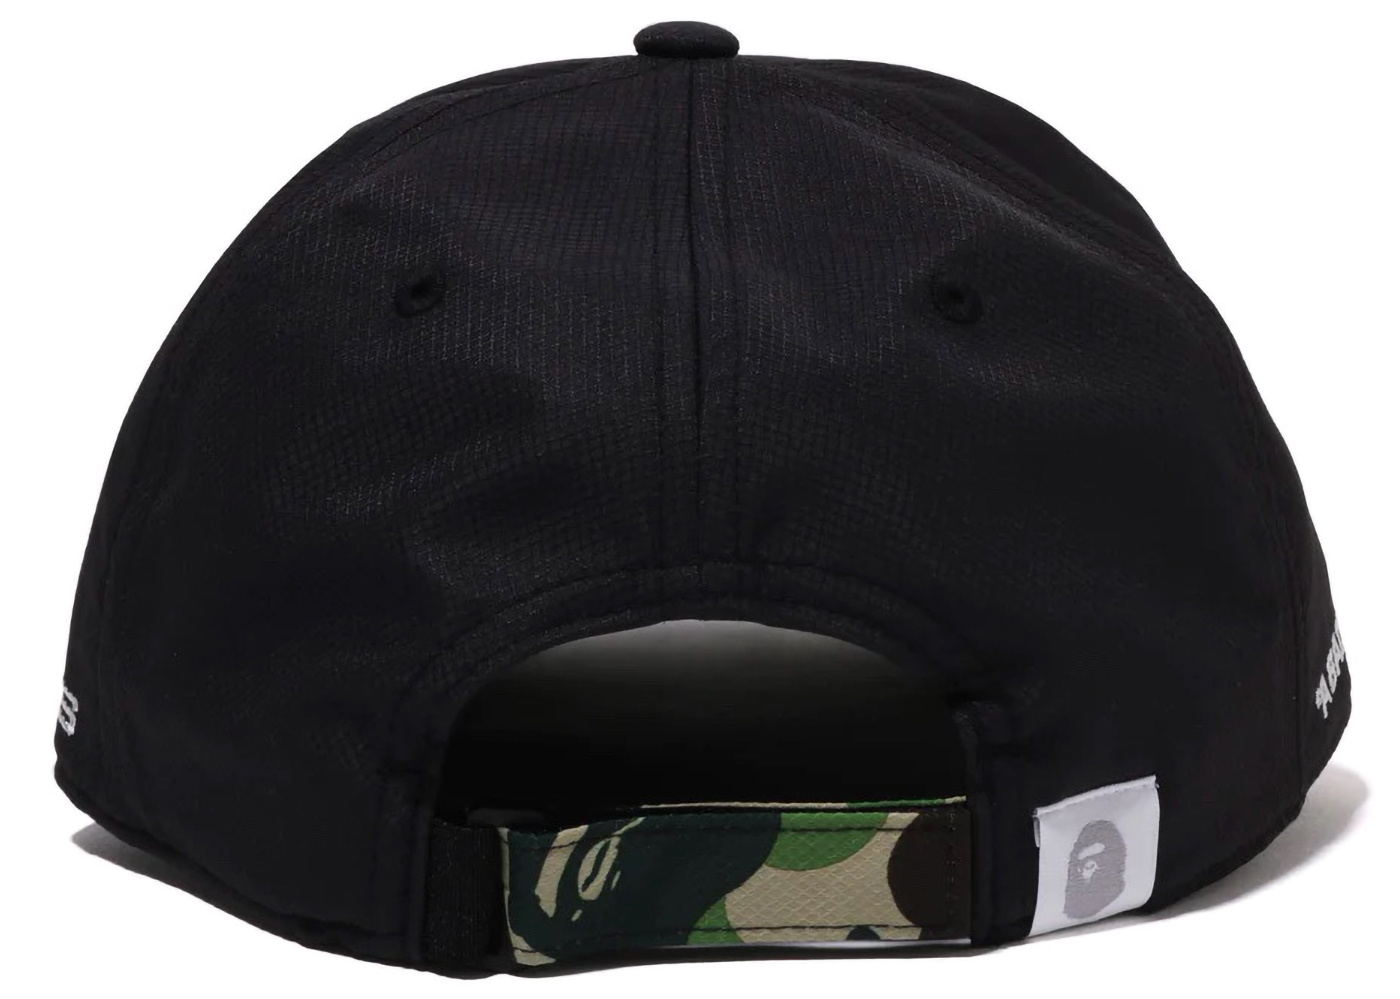 BAPE x adidas Golf Cap Black - FW23 - GB